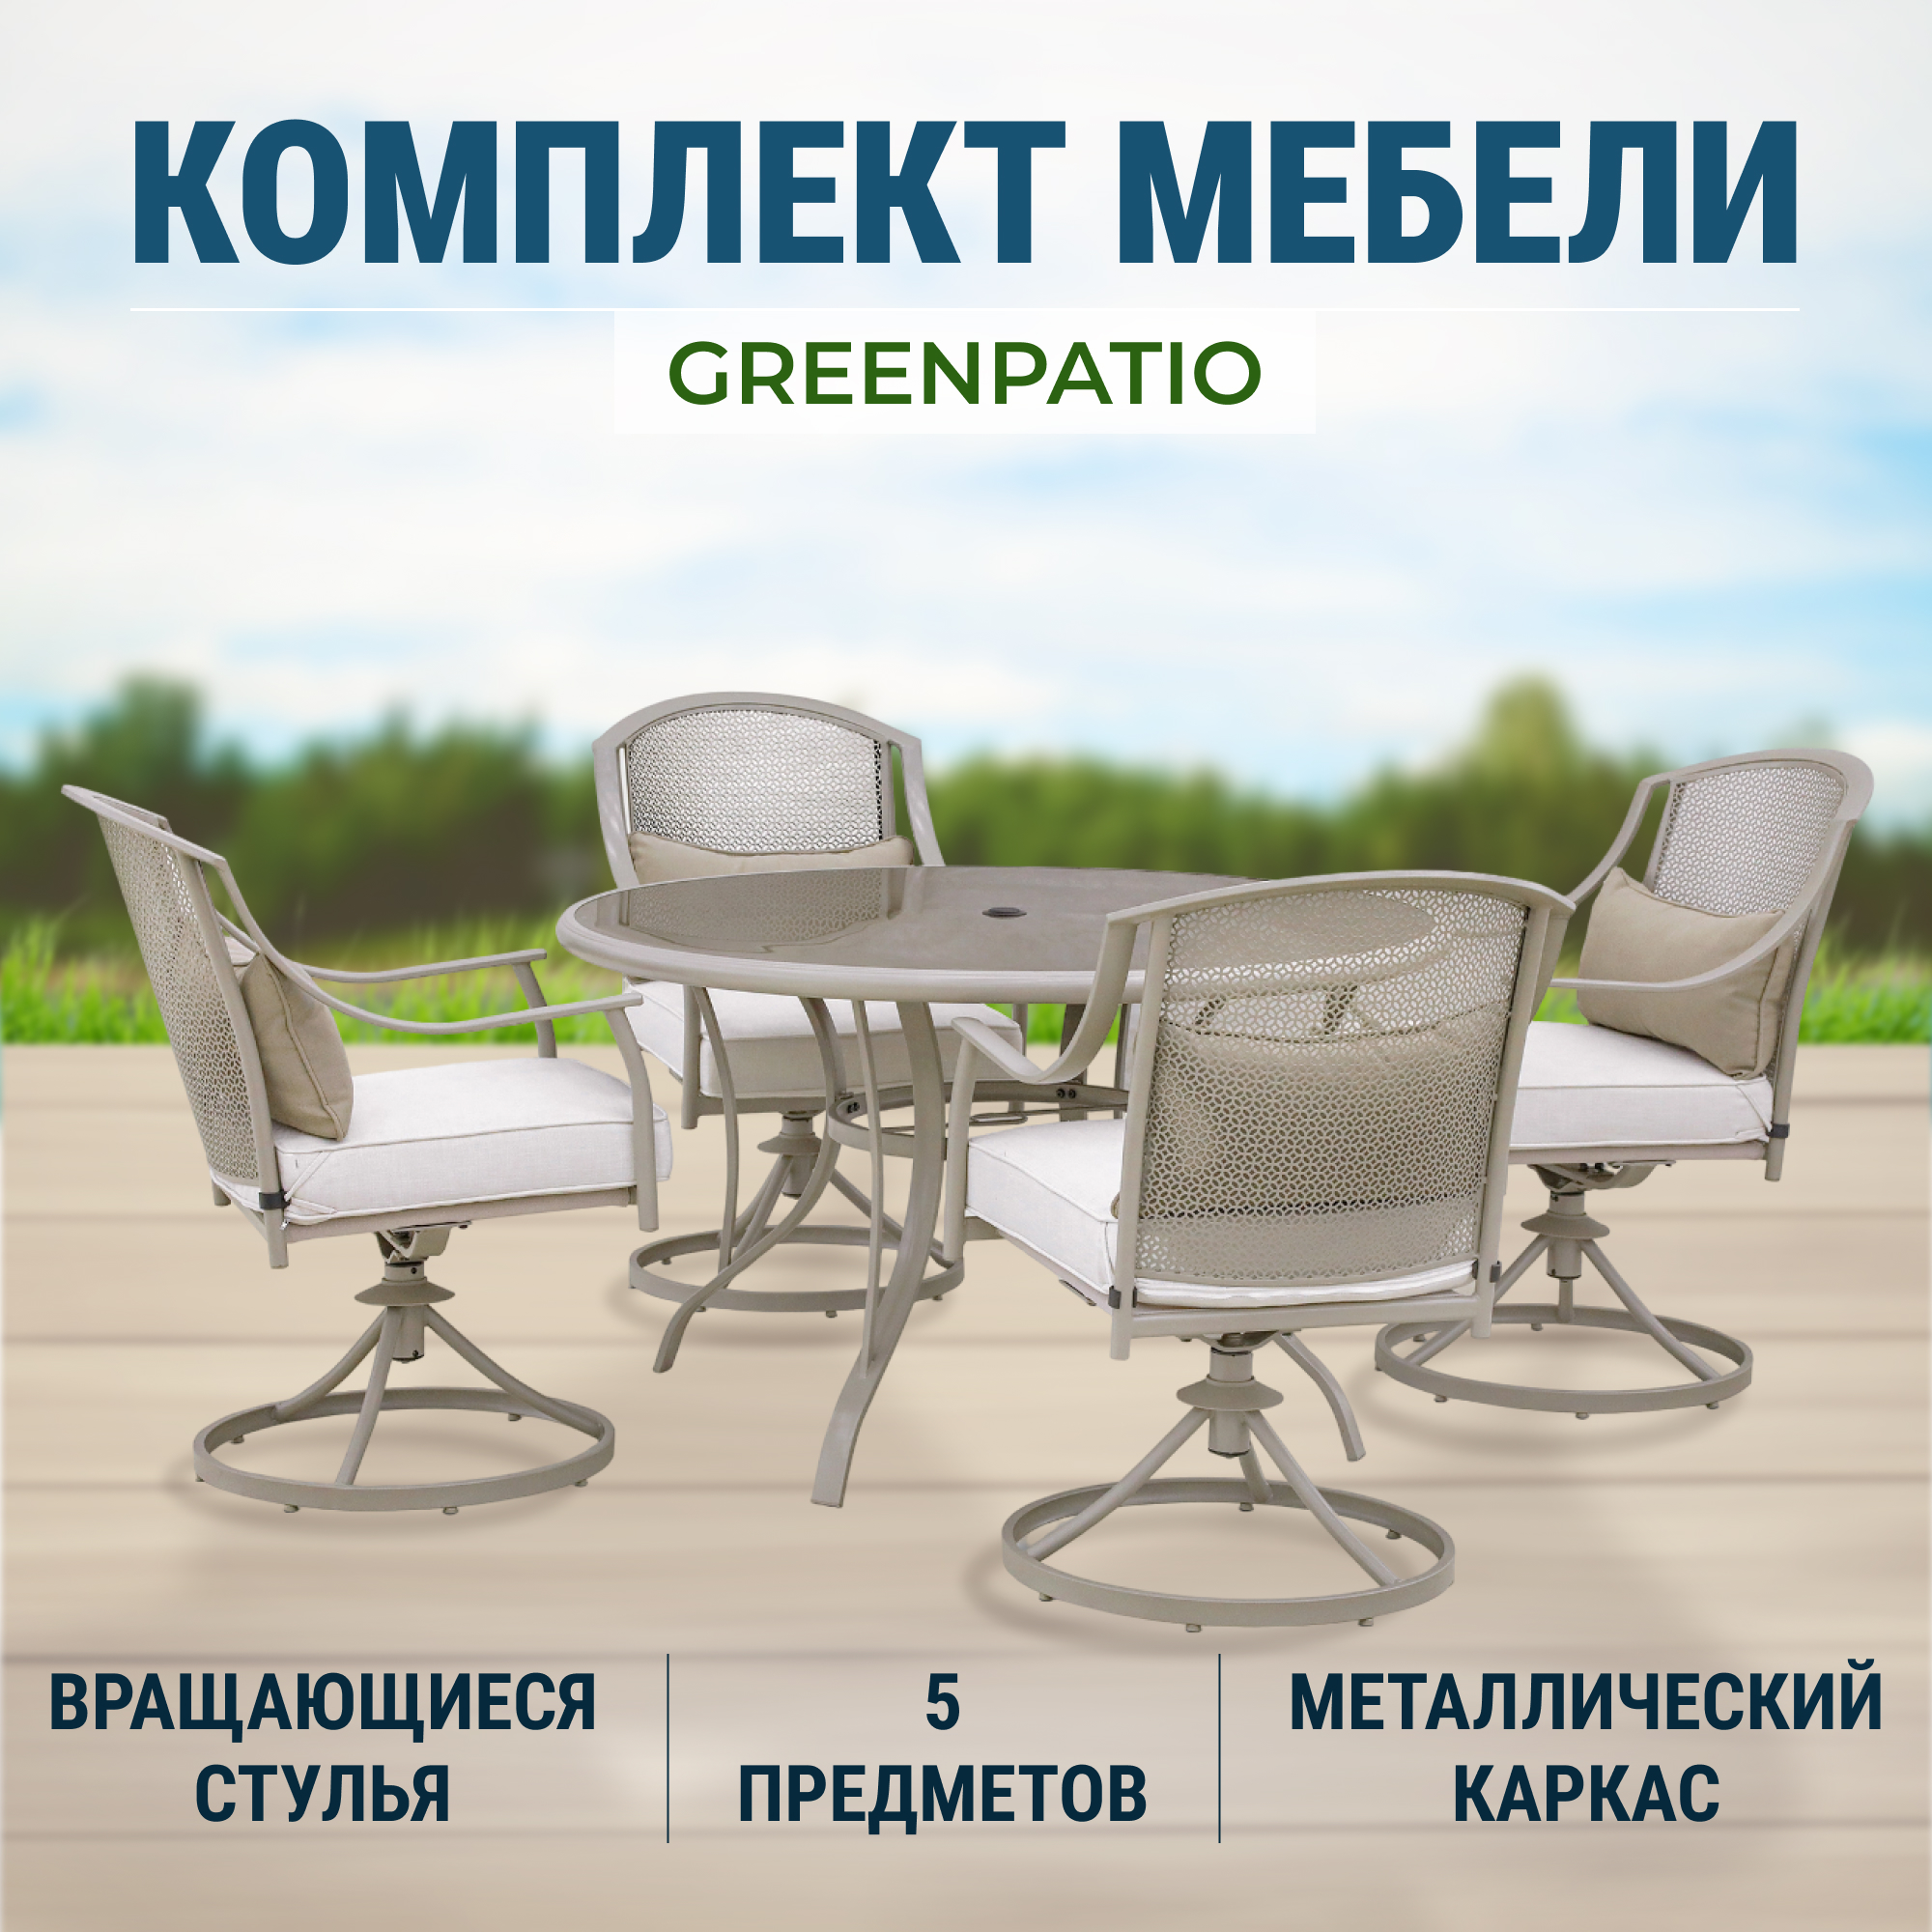 Комплект мебели Greenpatio с вращающимися стульями 5 предметов, цвет тауп, размер 122х70 - фото 2